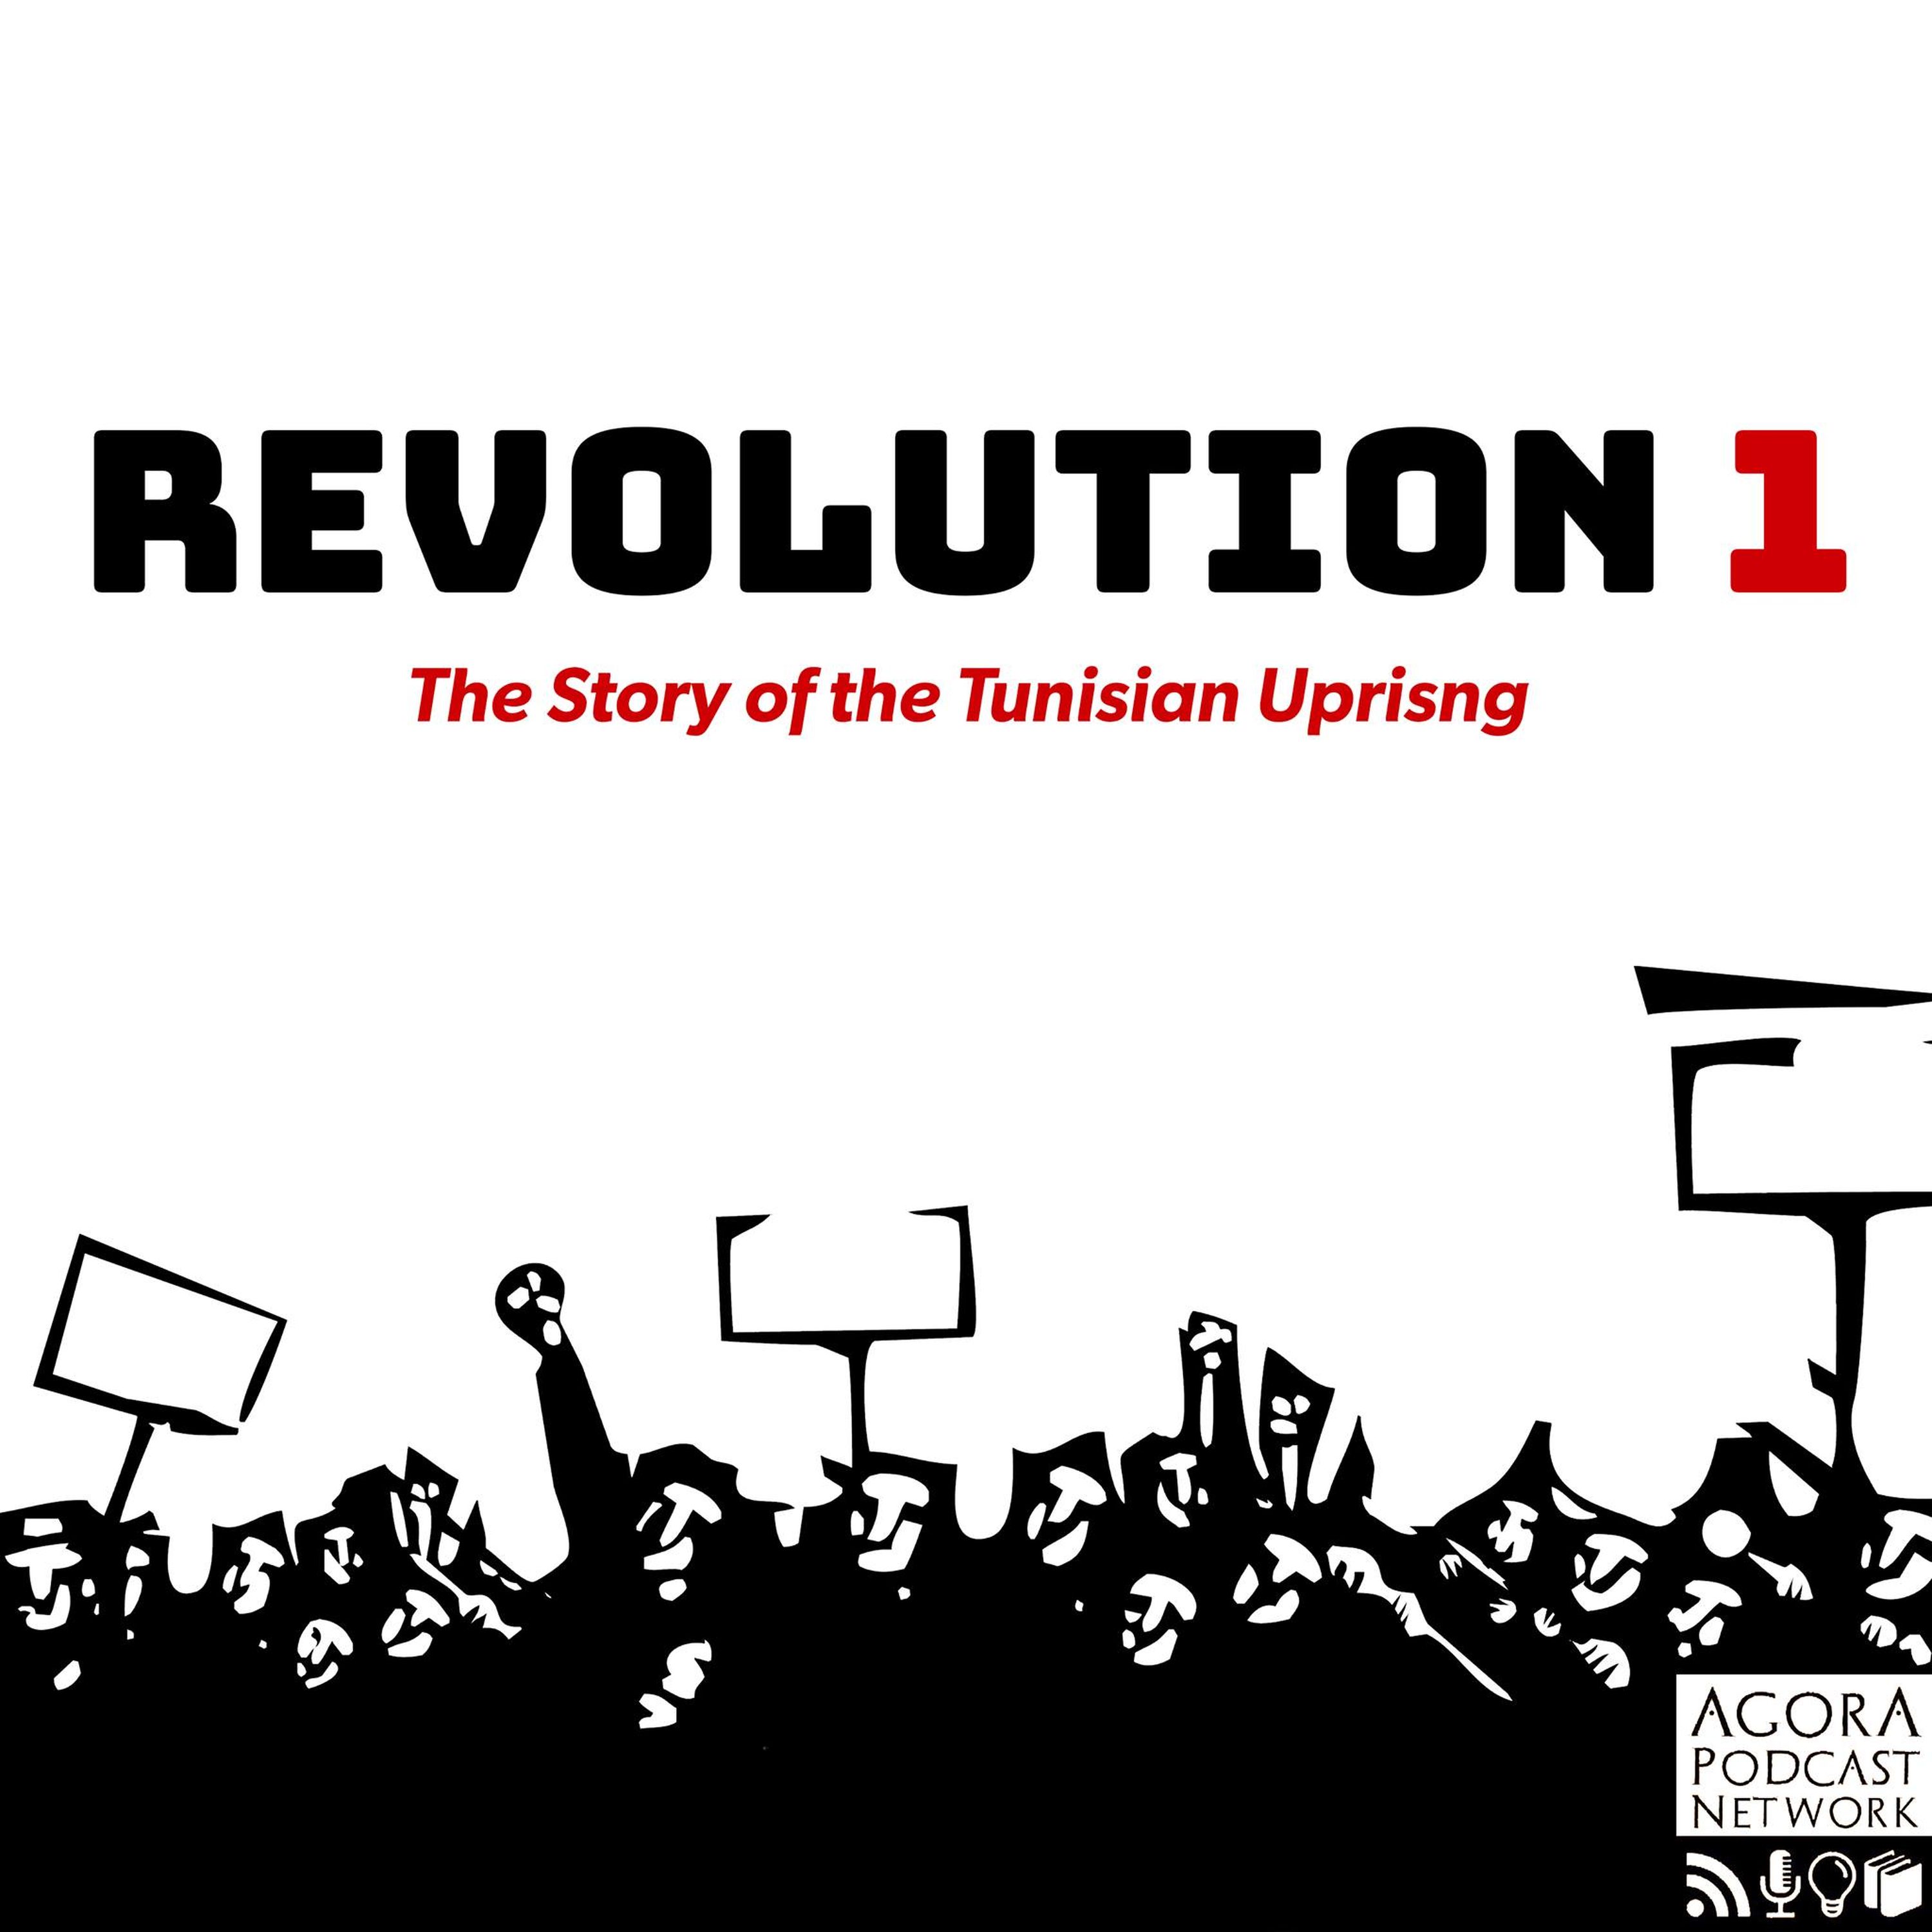 Announcing: REVOLUTION 1!